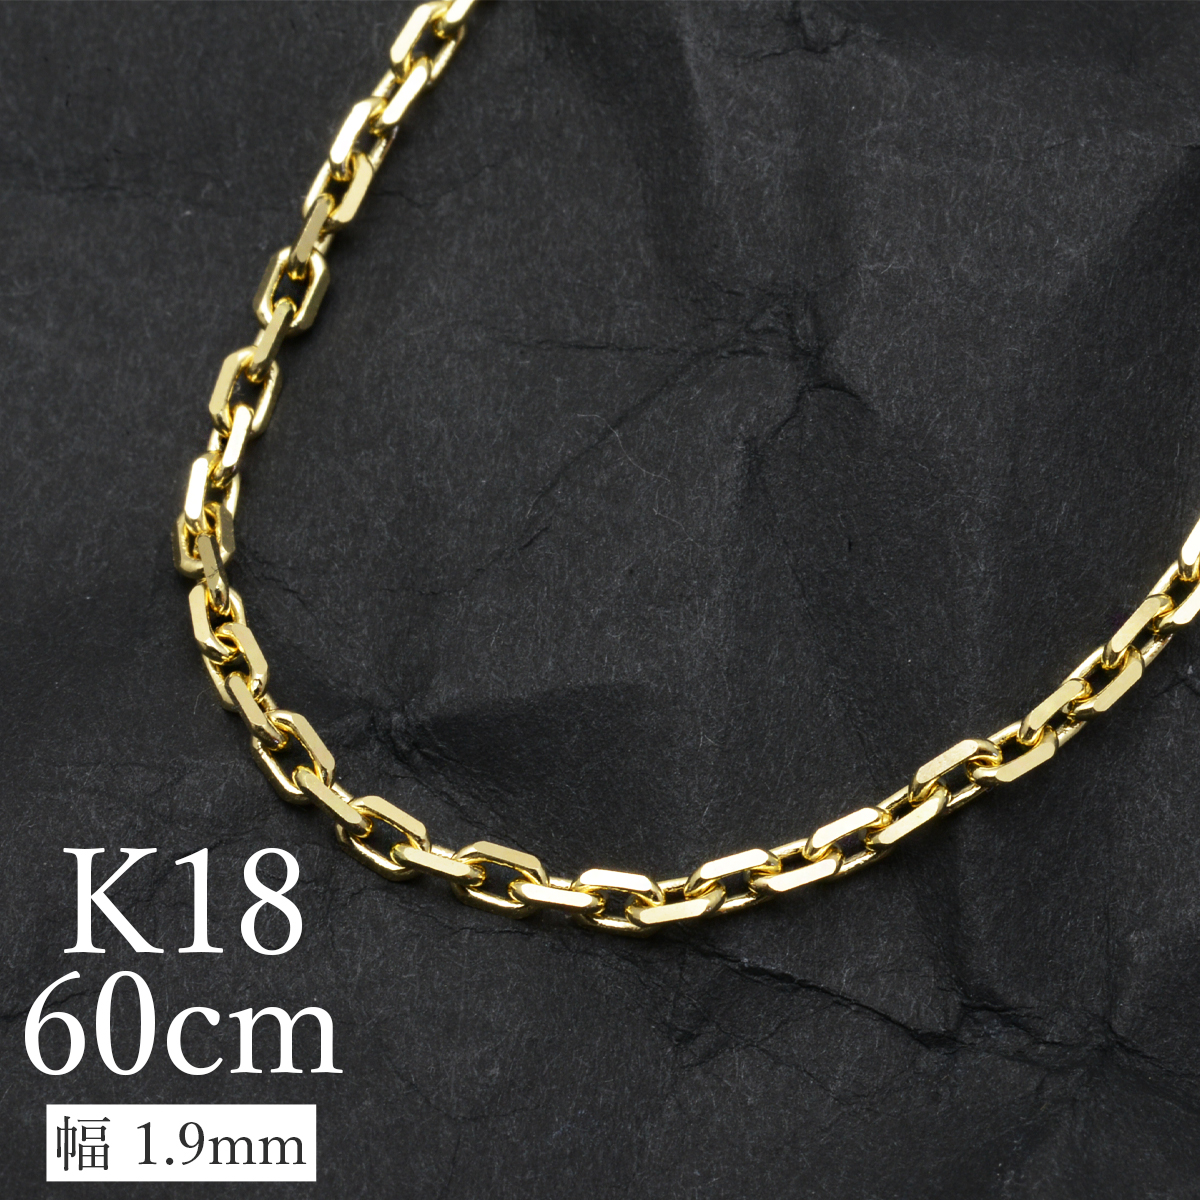 k18ネックレス K18 イエローゴールド メンズ 男性 カットアズキチェーン 幅1.9mm チェーン 60cm/ プレゼント ギフト gold necklace